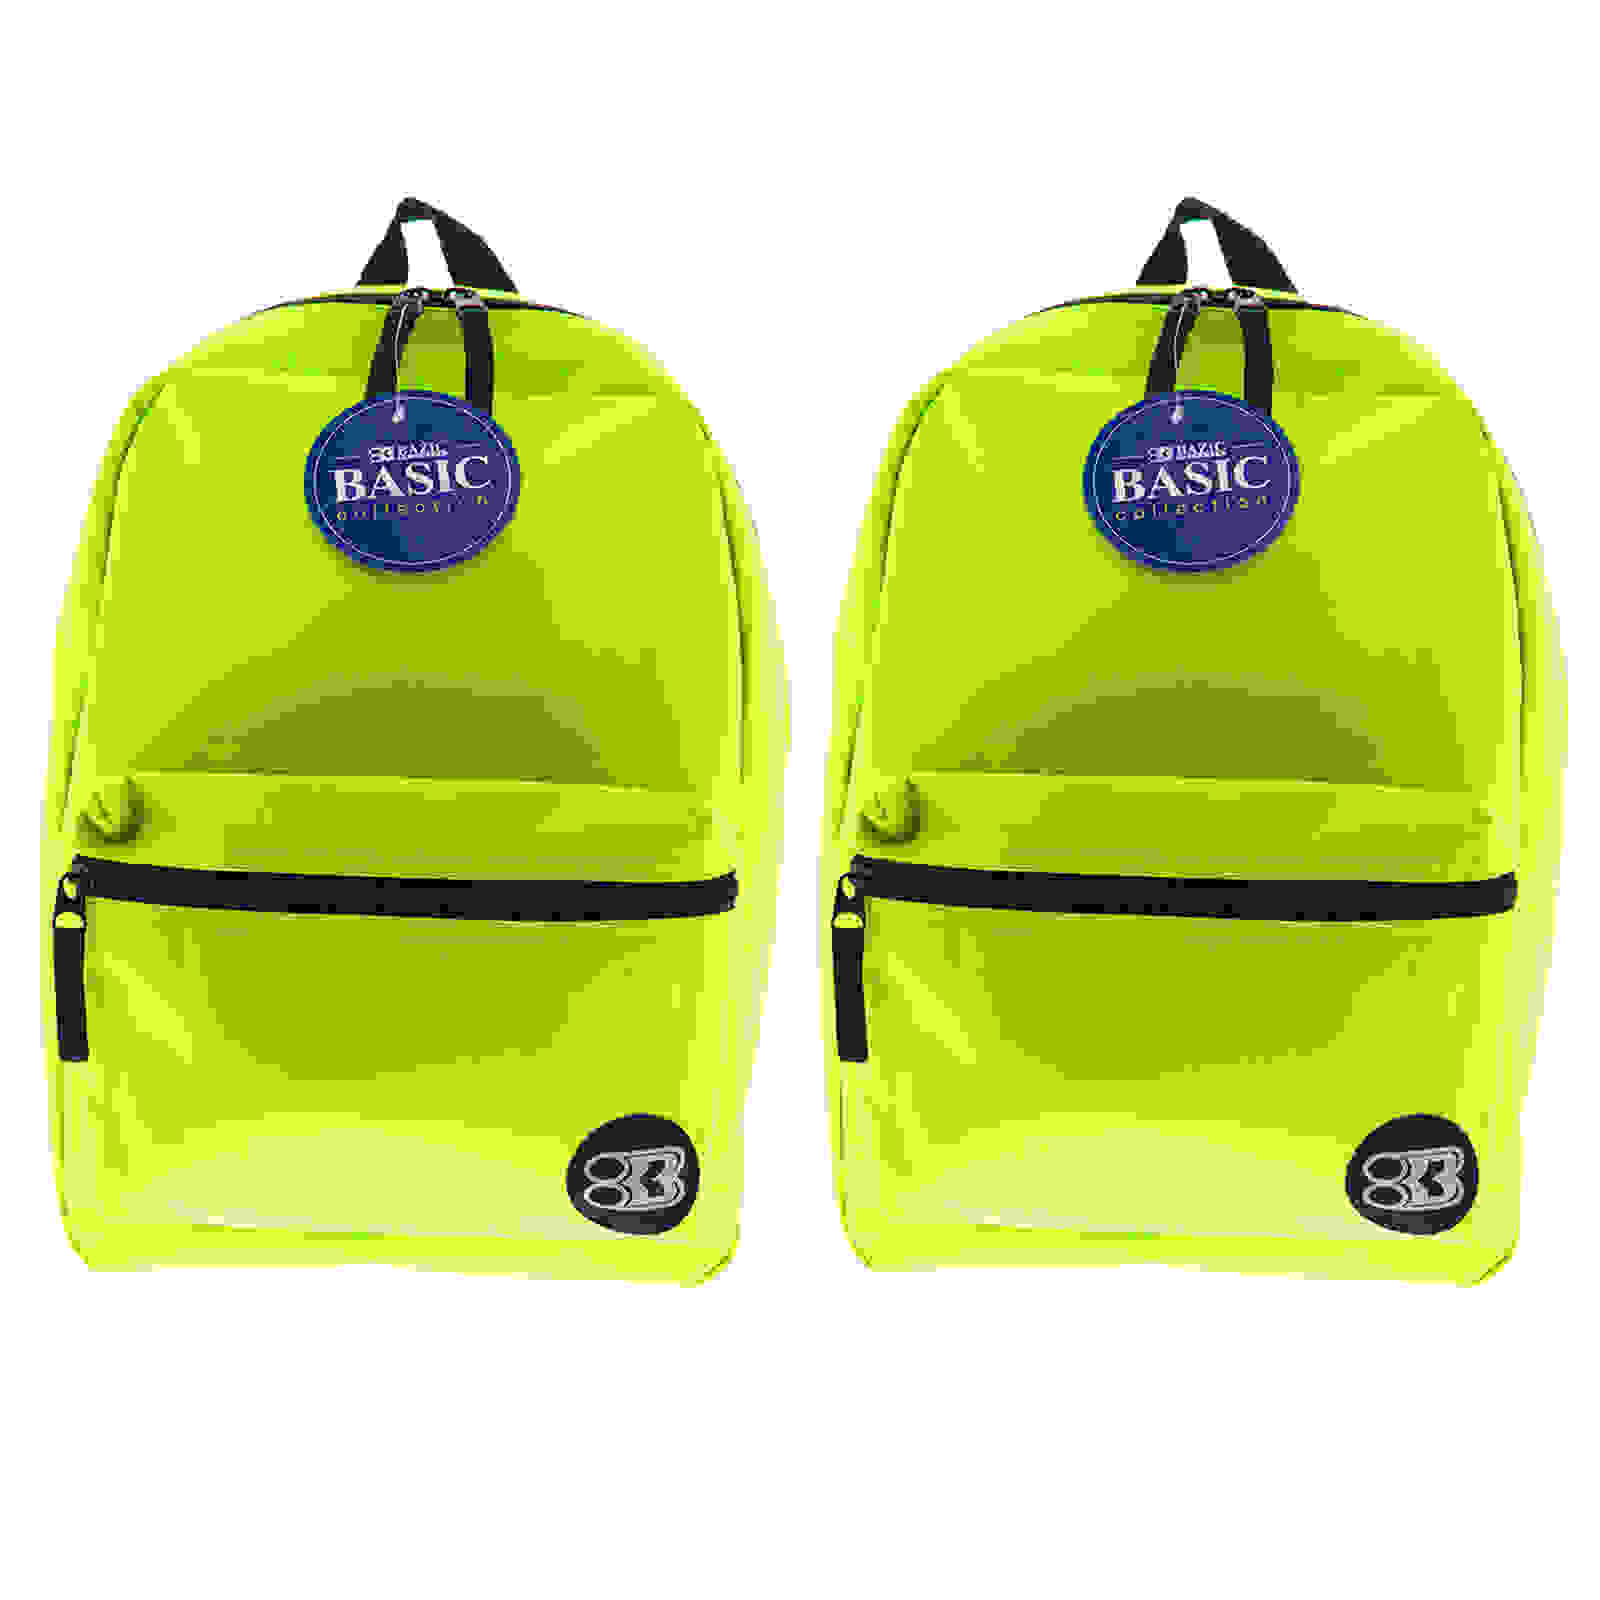 Basic Backpack, 16", Lime Green, Pack of 2